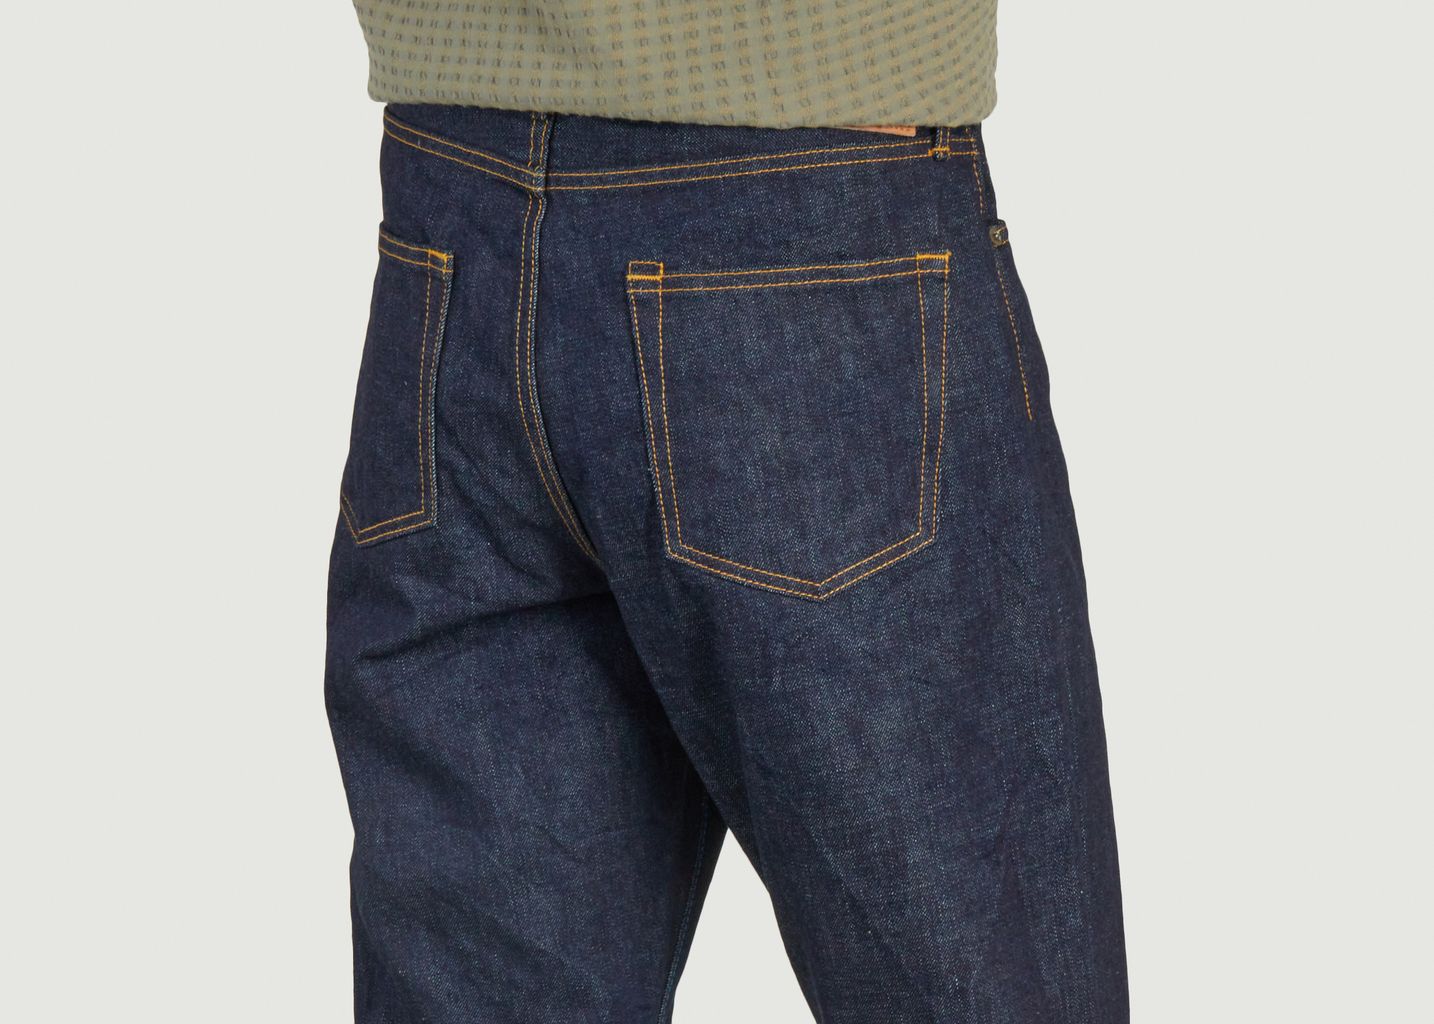 Jeans Selvedge Loose J501 14.8oz - Japan Blue Jeans